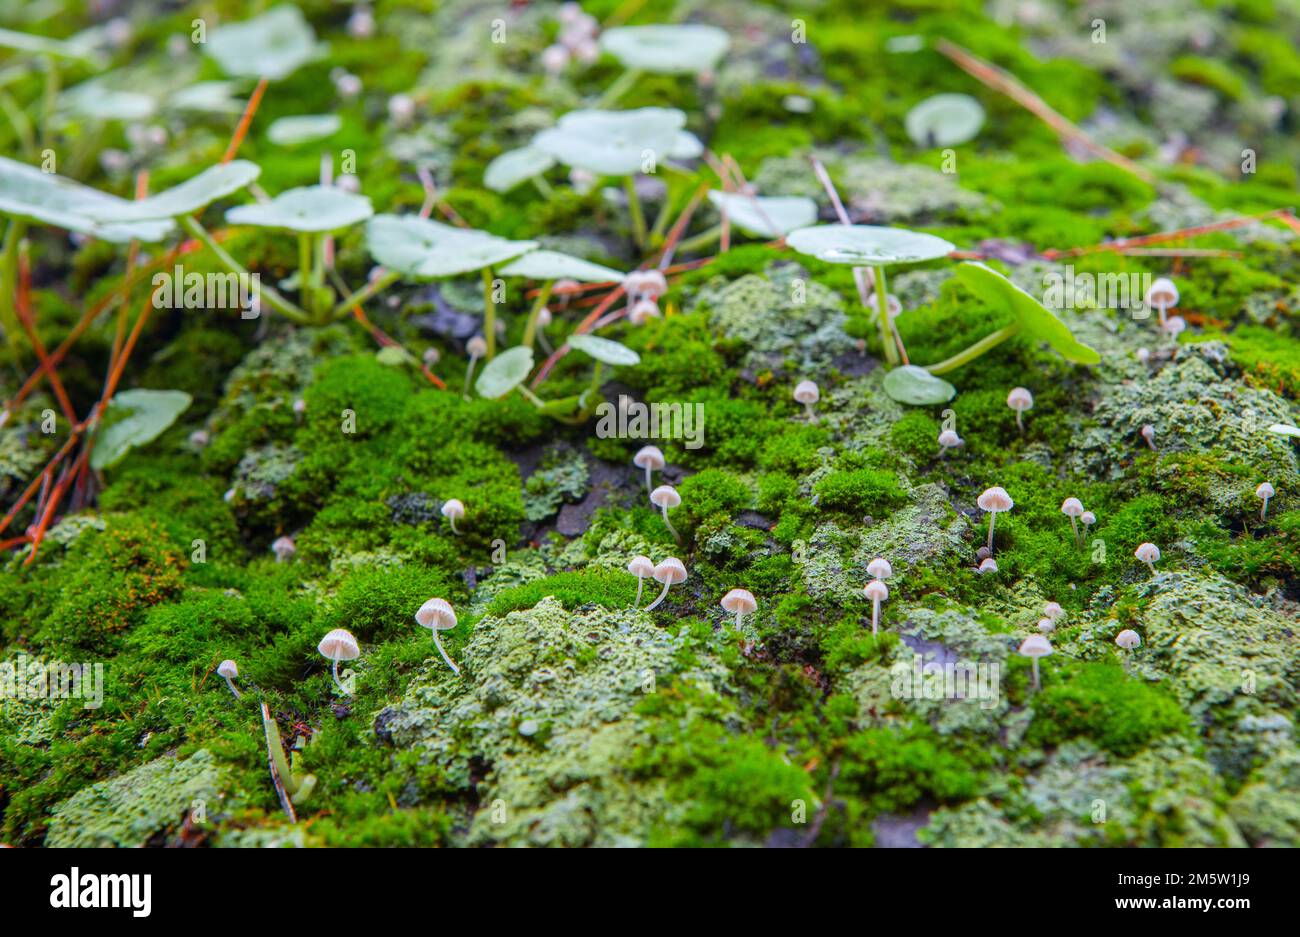 Little mushroom growing between navelworts on wet green tree bark. Closeup Stock Photo